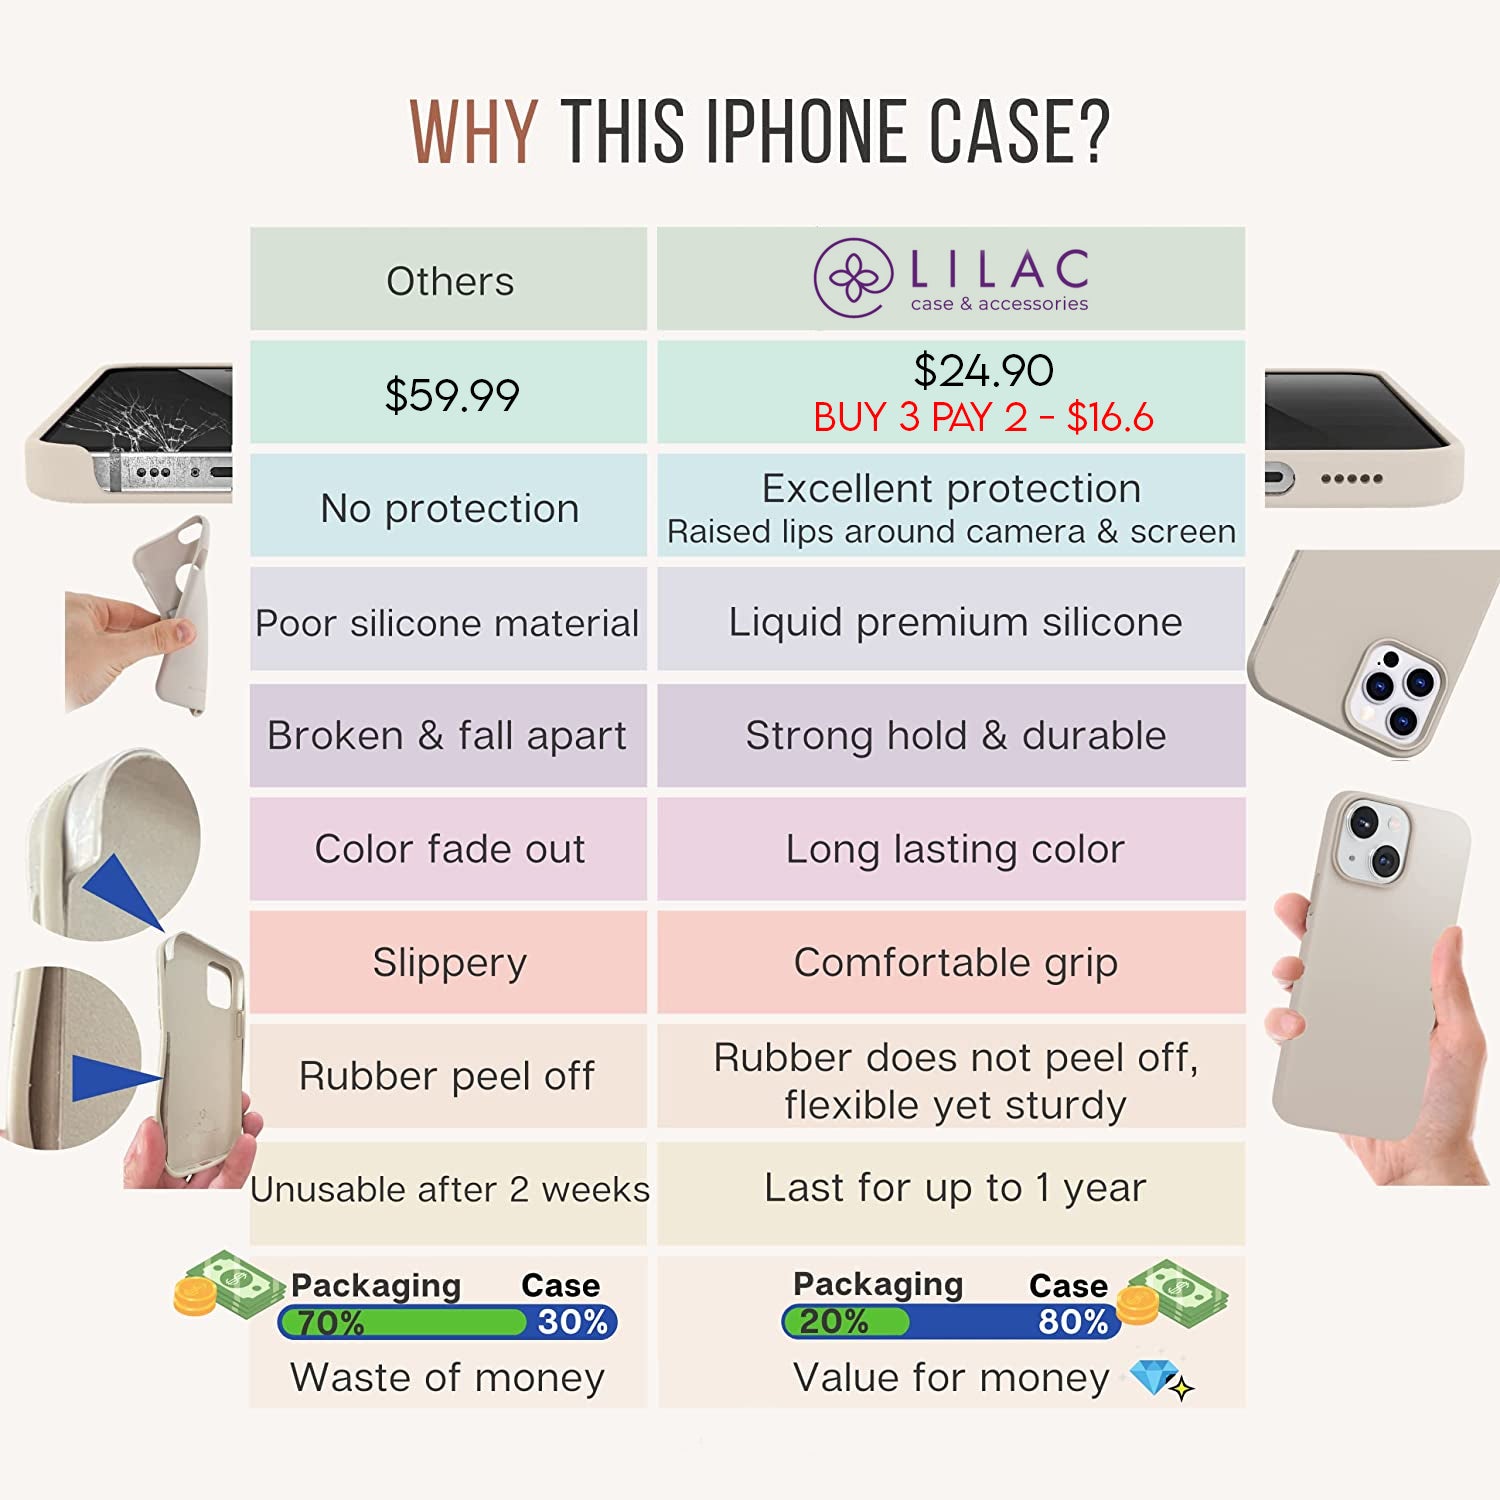 iPhone Silicone Case (Pistachio Green)